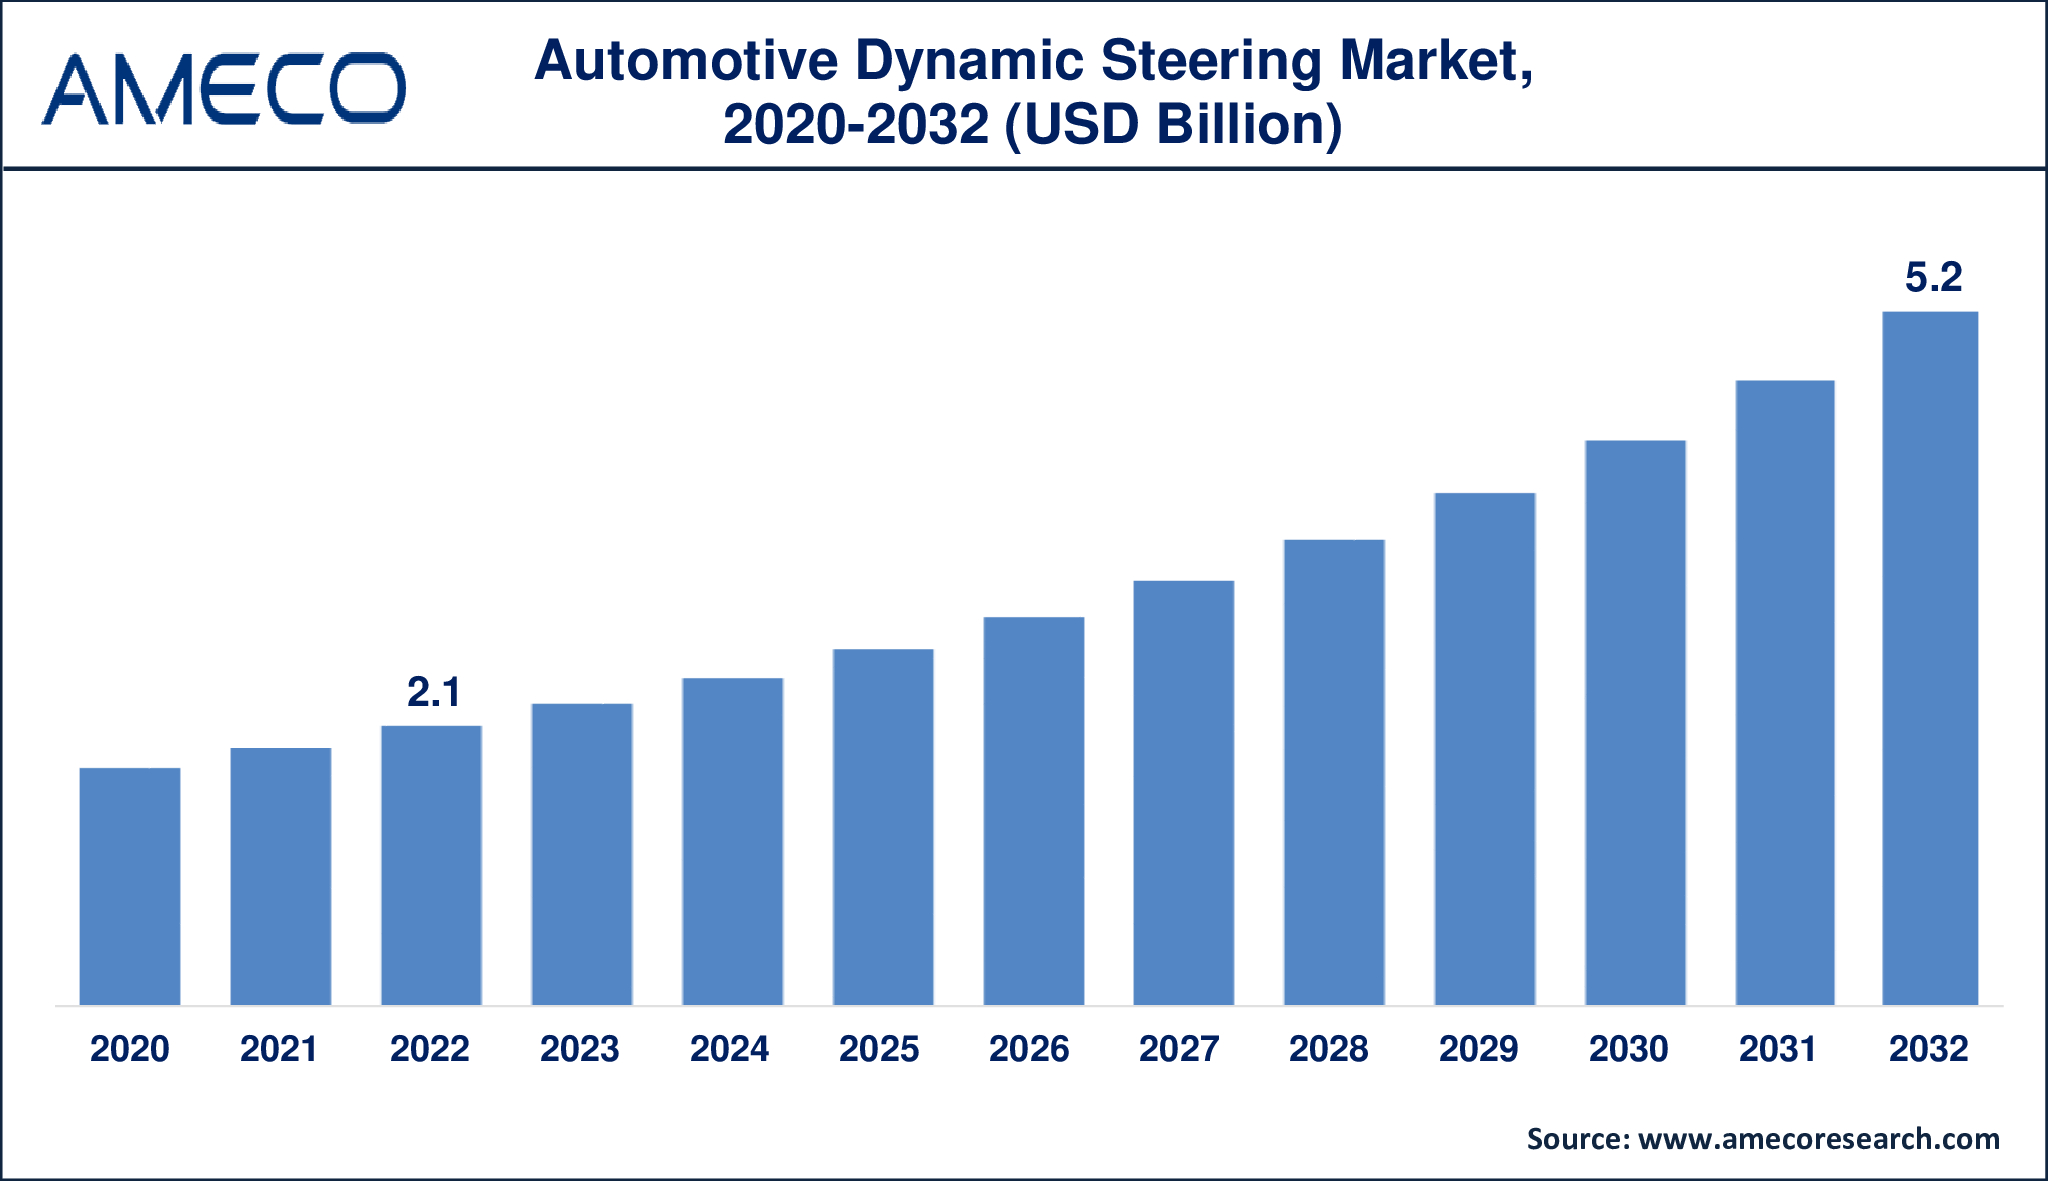 Automotive Dynamic Steering Market Dynamics